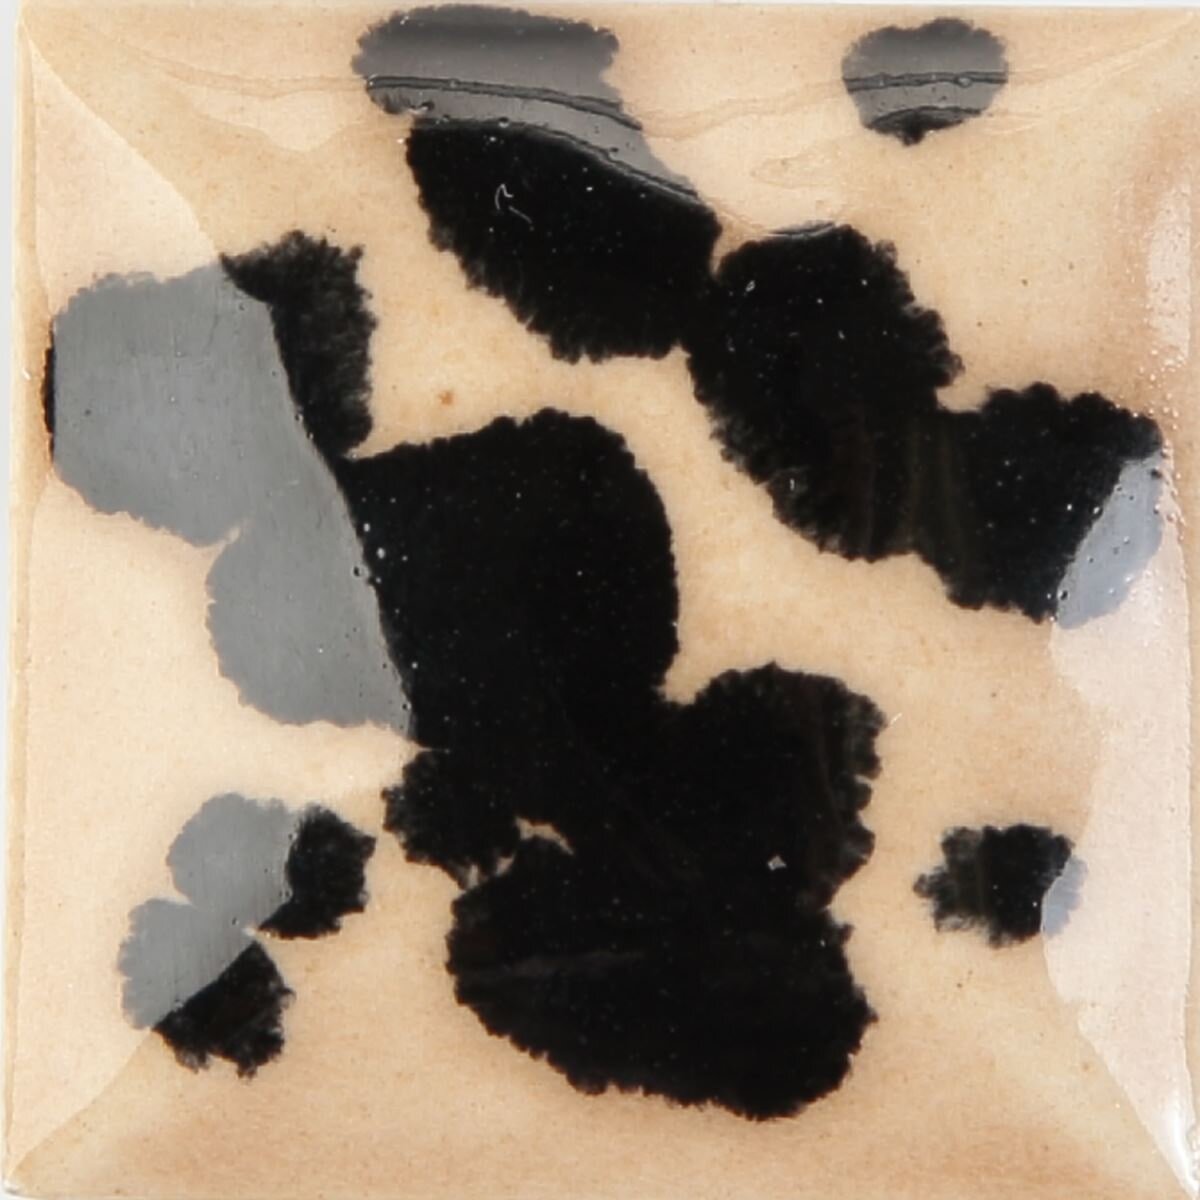 Pitch Black ~ Colour Burst Crystal Chips